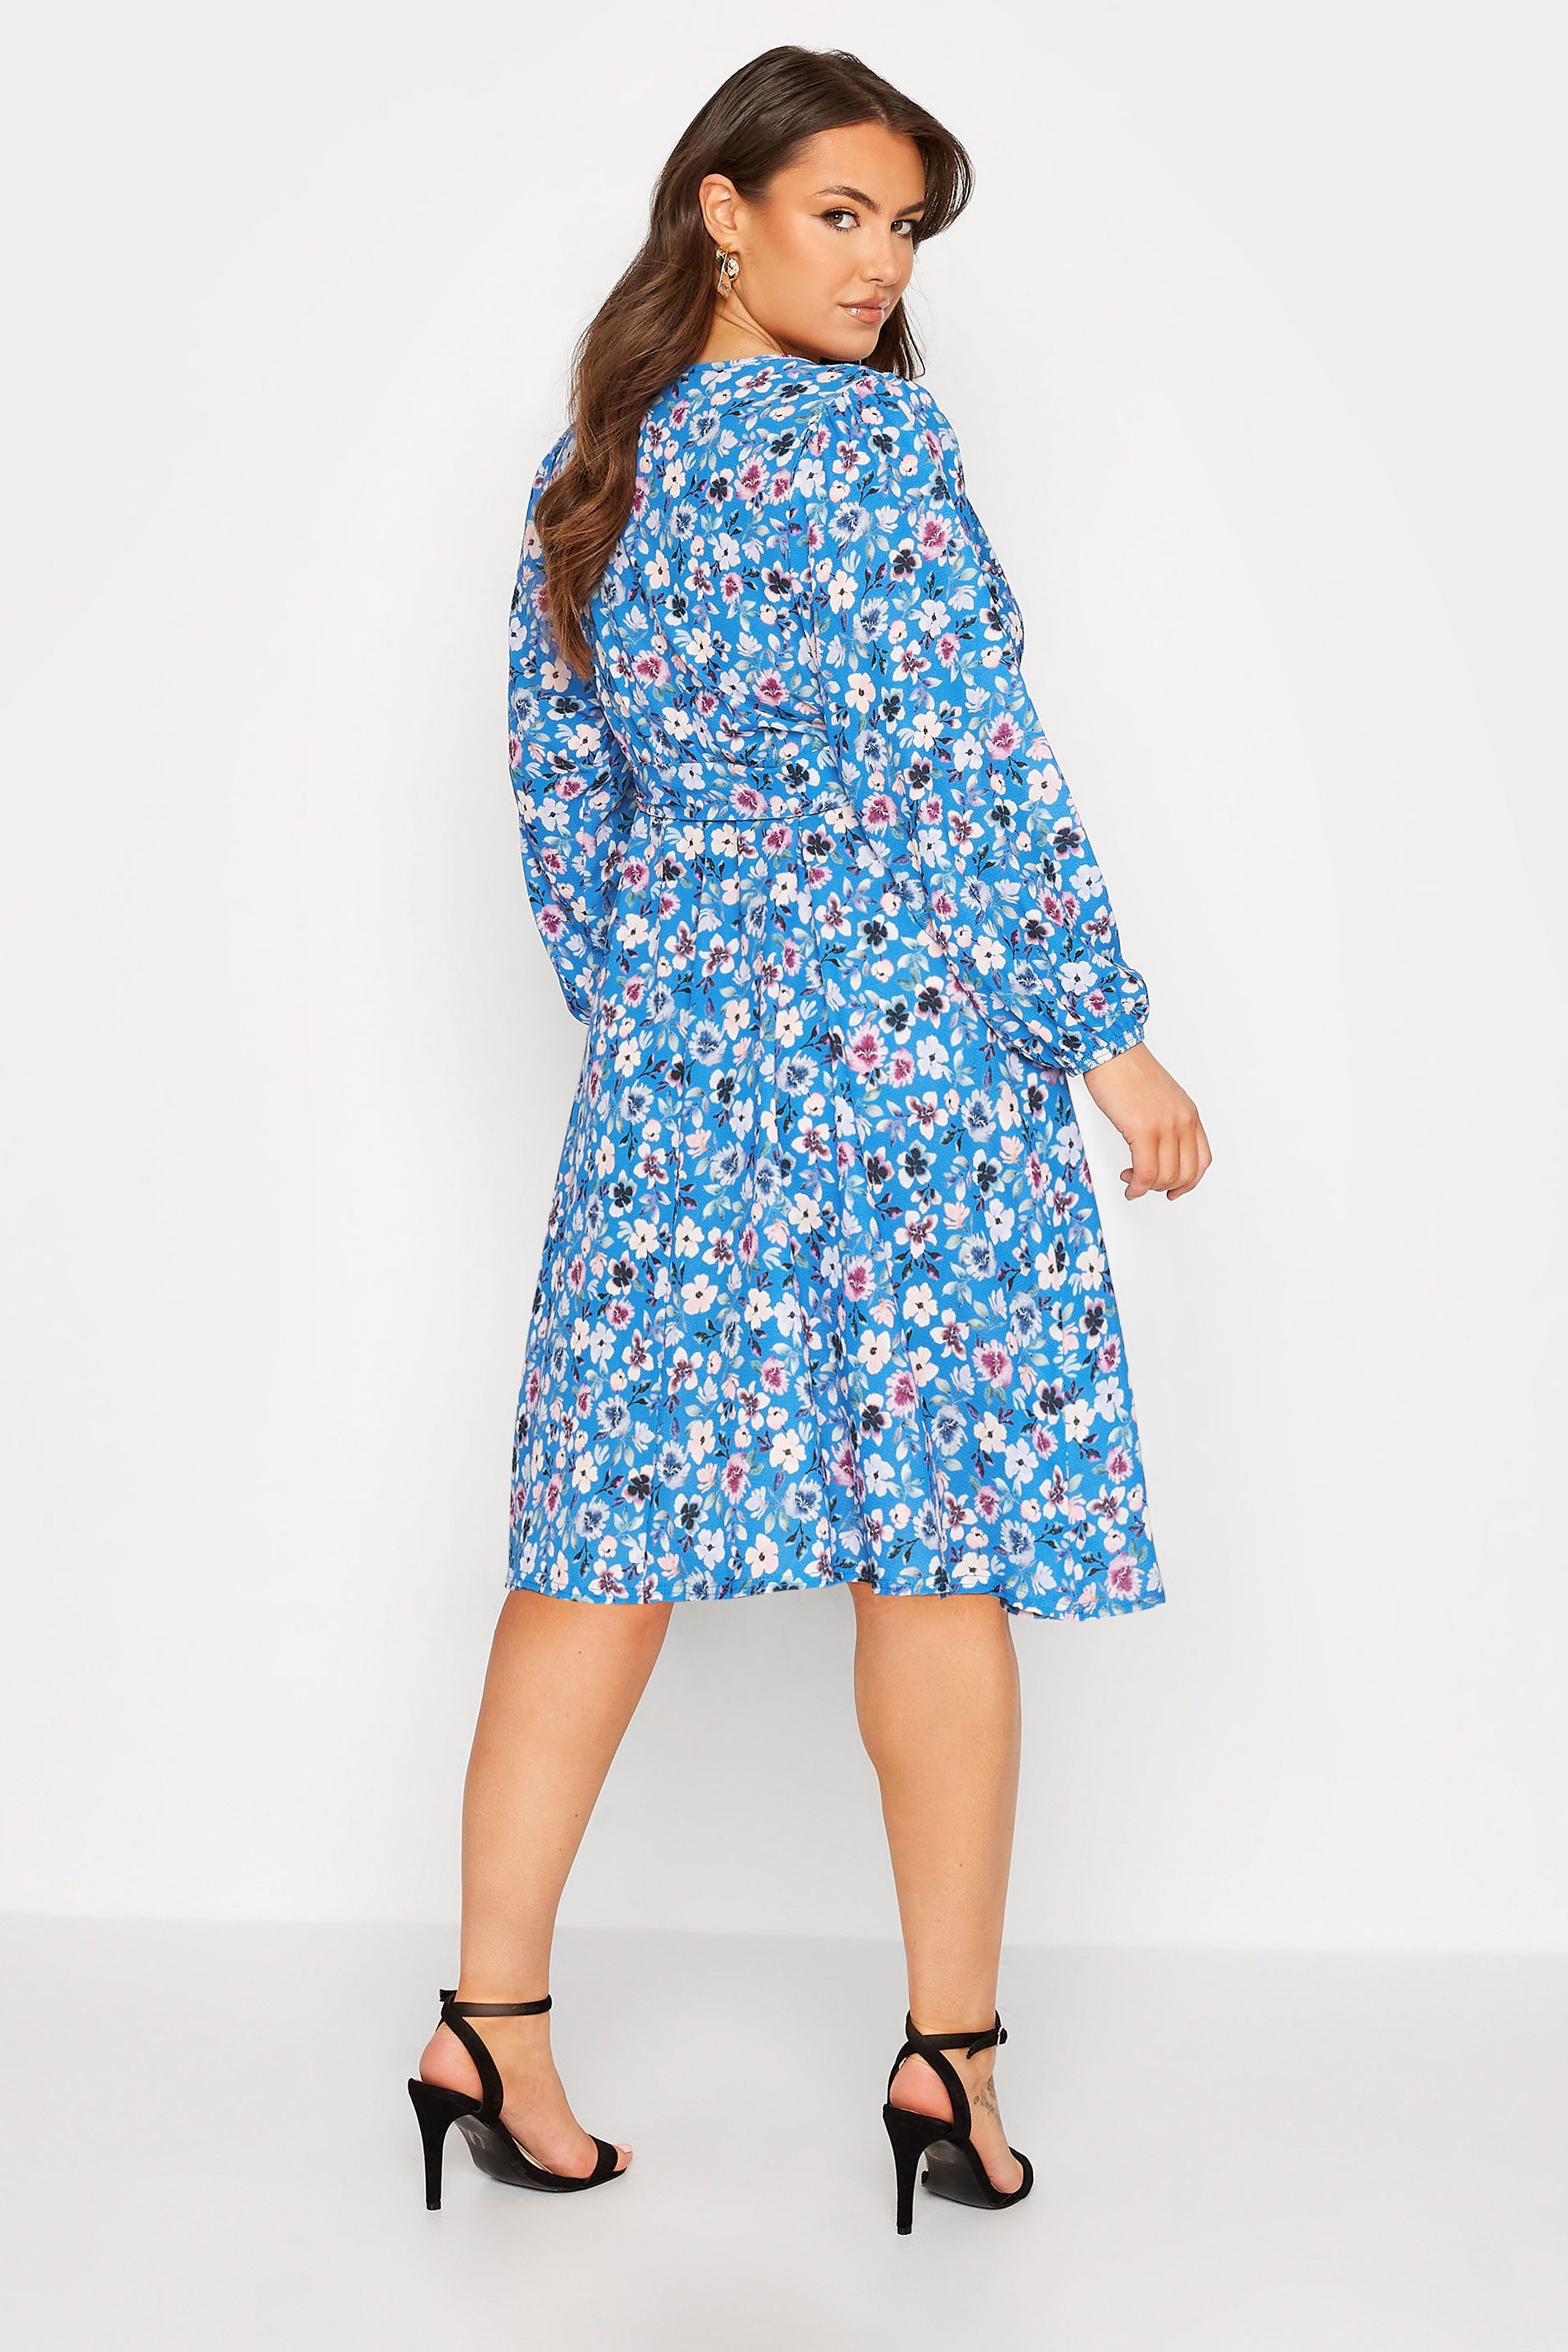 YOURS LONDON Plus Size Blue Floral Print Wrap Dress | Yours Clothing 3